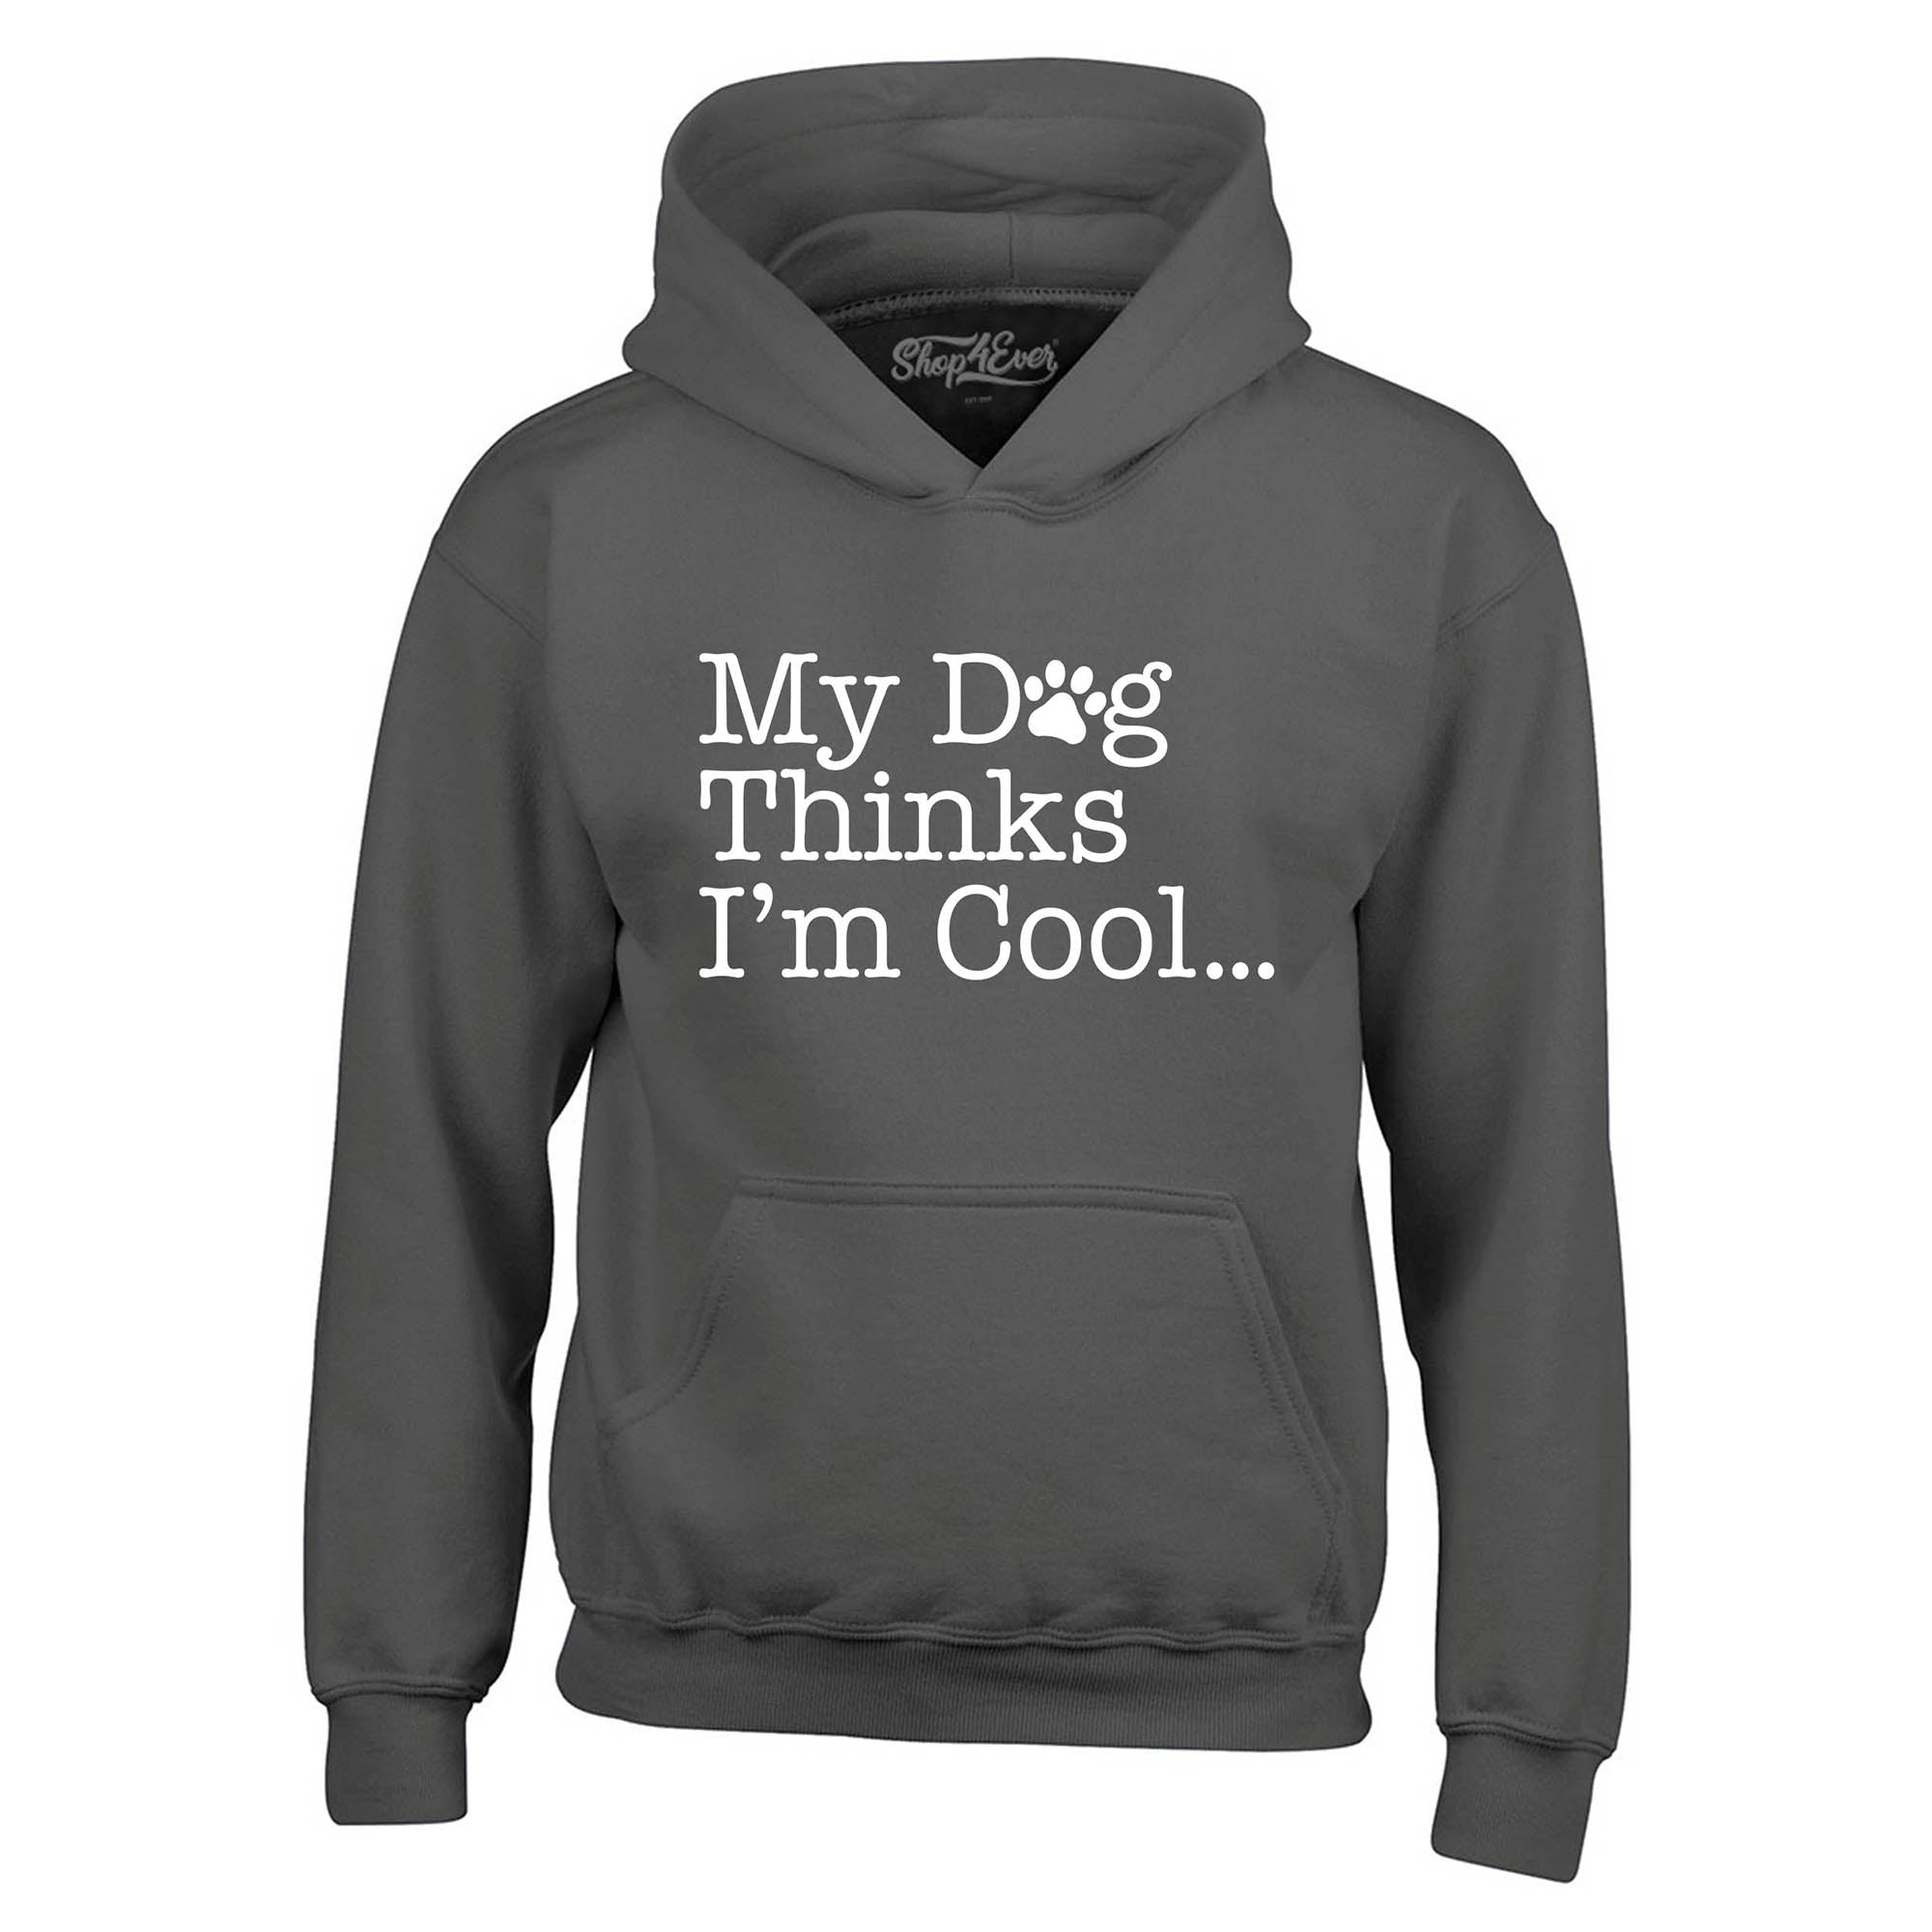 My Dog Thinks I'm Cool… Hoodie Sweatshirts